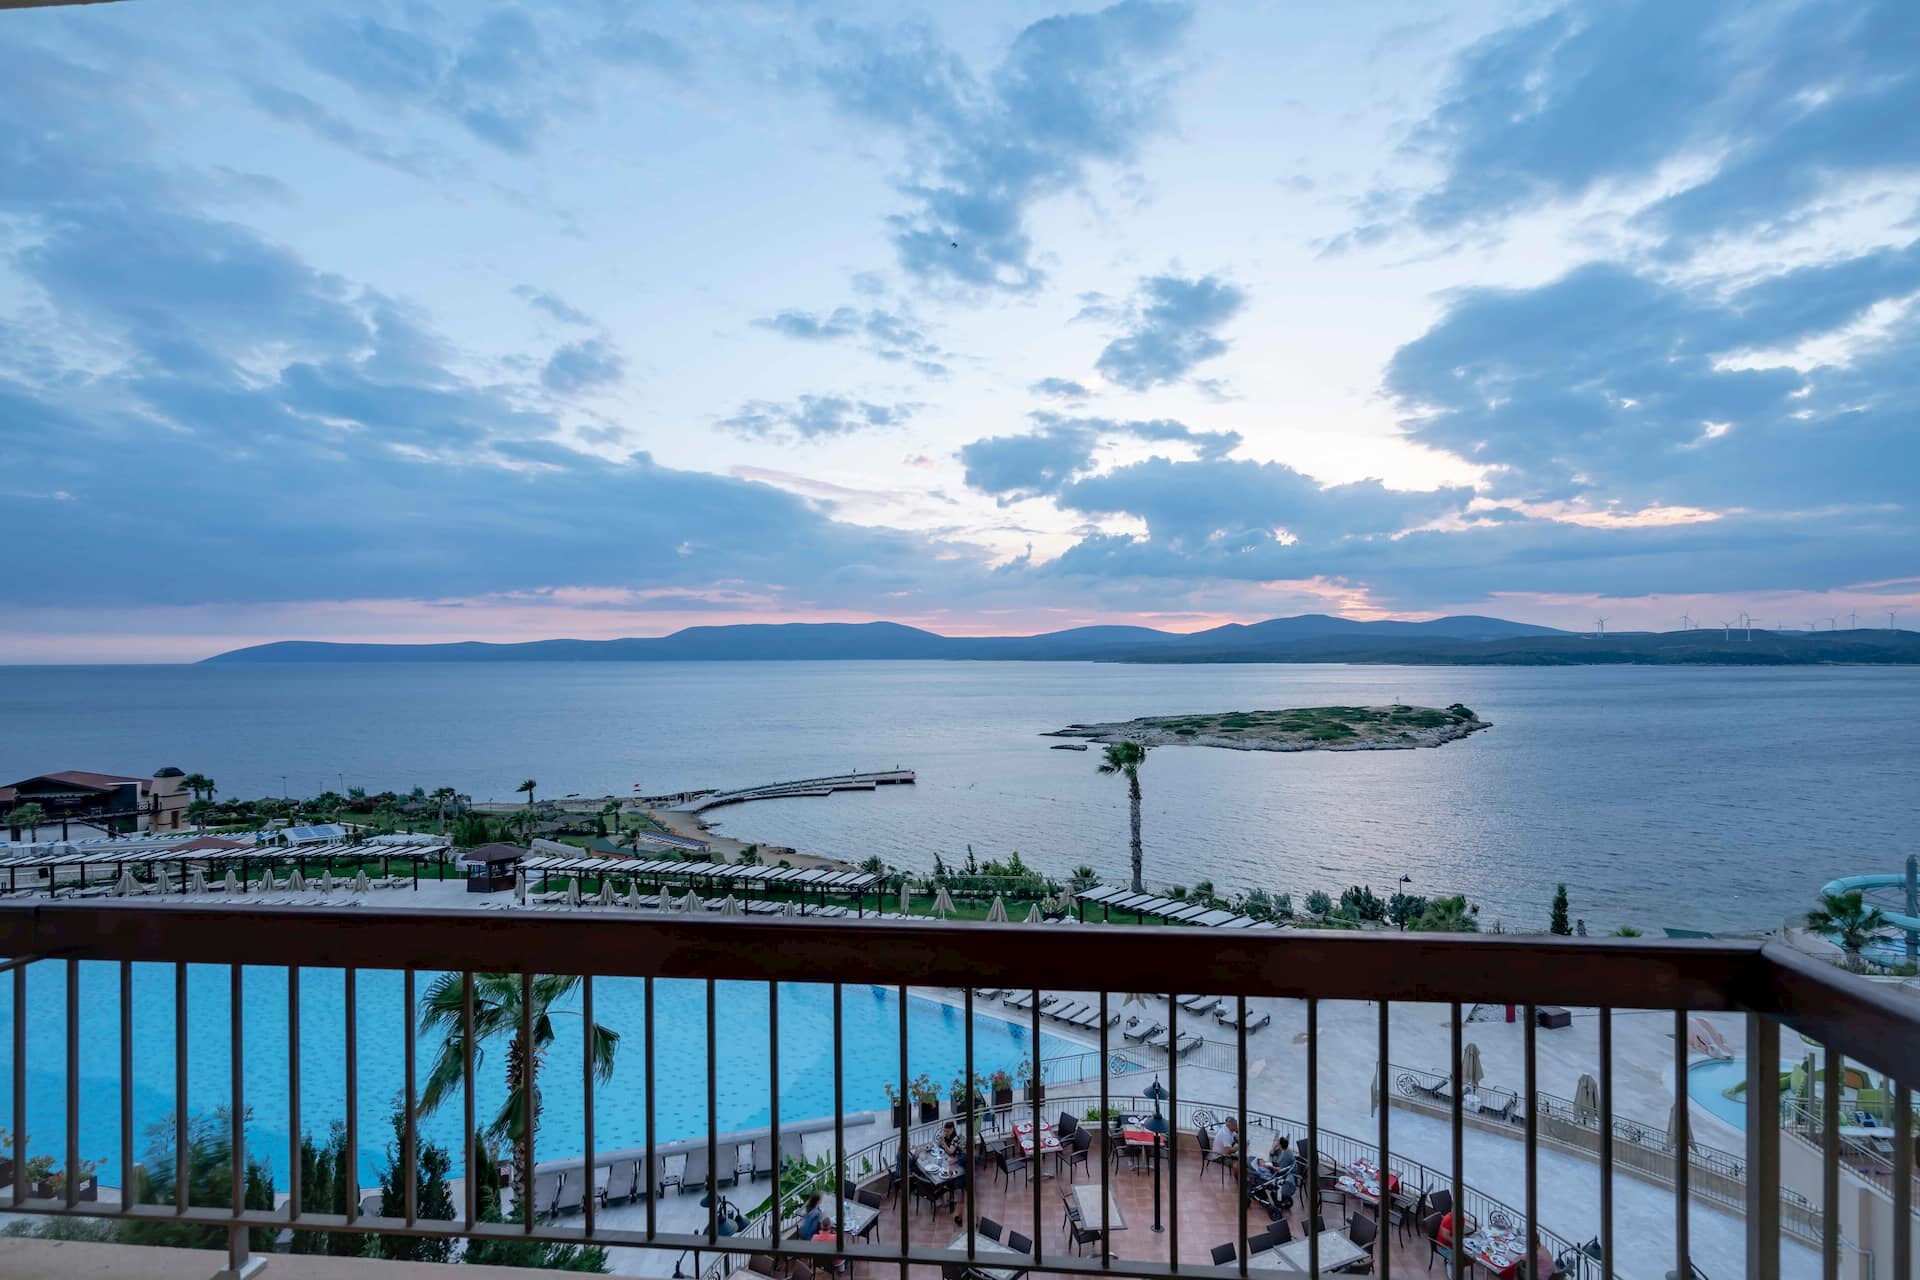 EUPHORIA AEGEAN RESORT AND THERMAL HOTEL – Standart Room Sea View